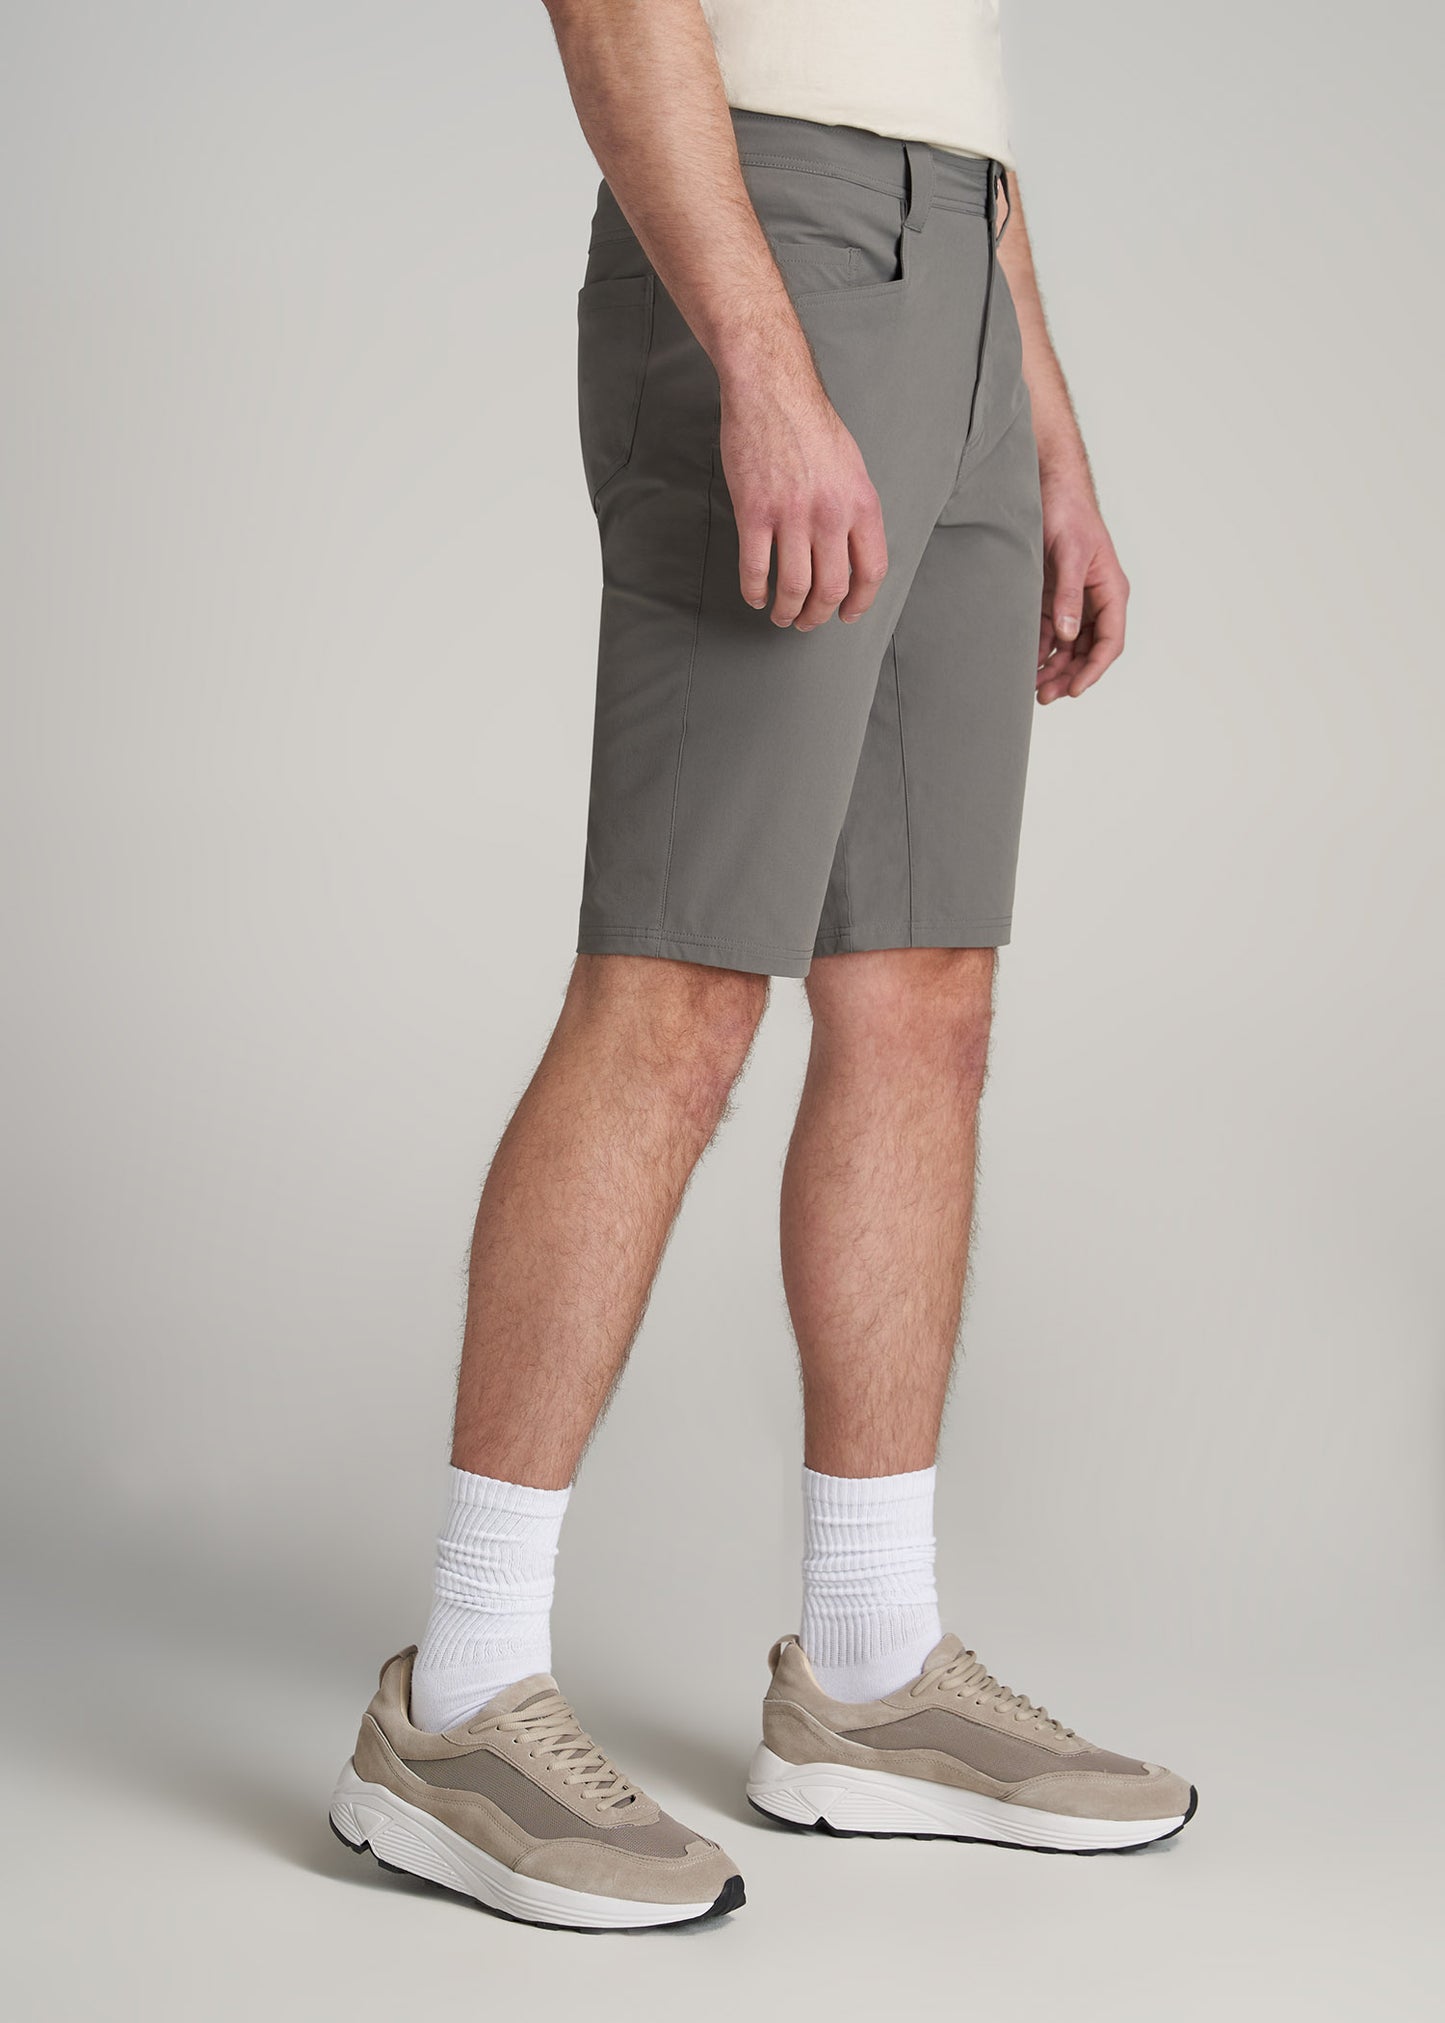    American-Tall-Men-Hiking-Shorts-MediumGrey-side